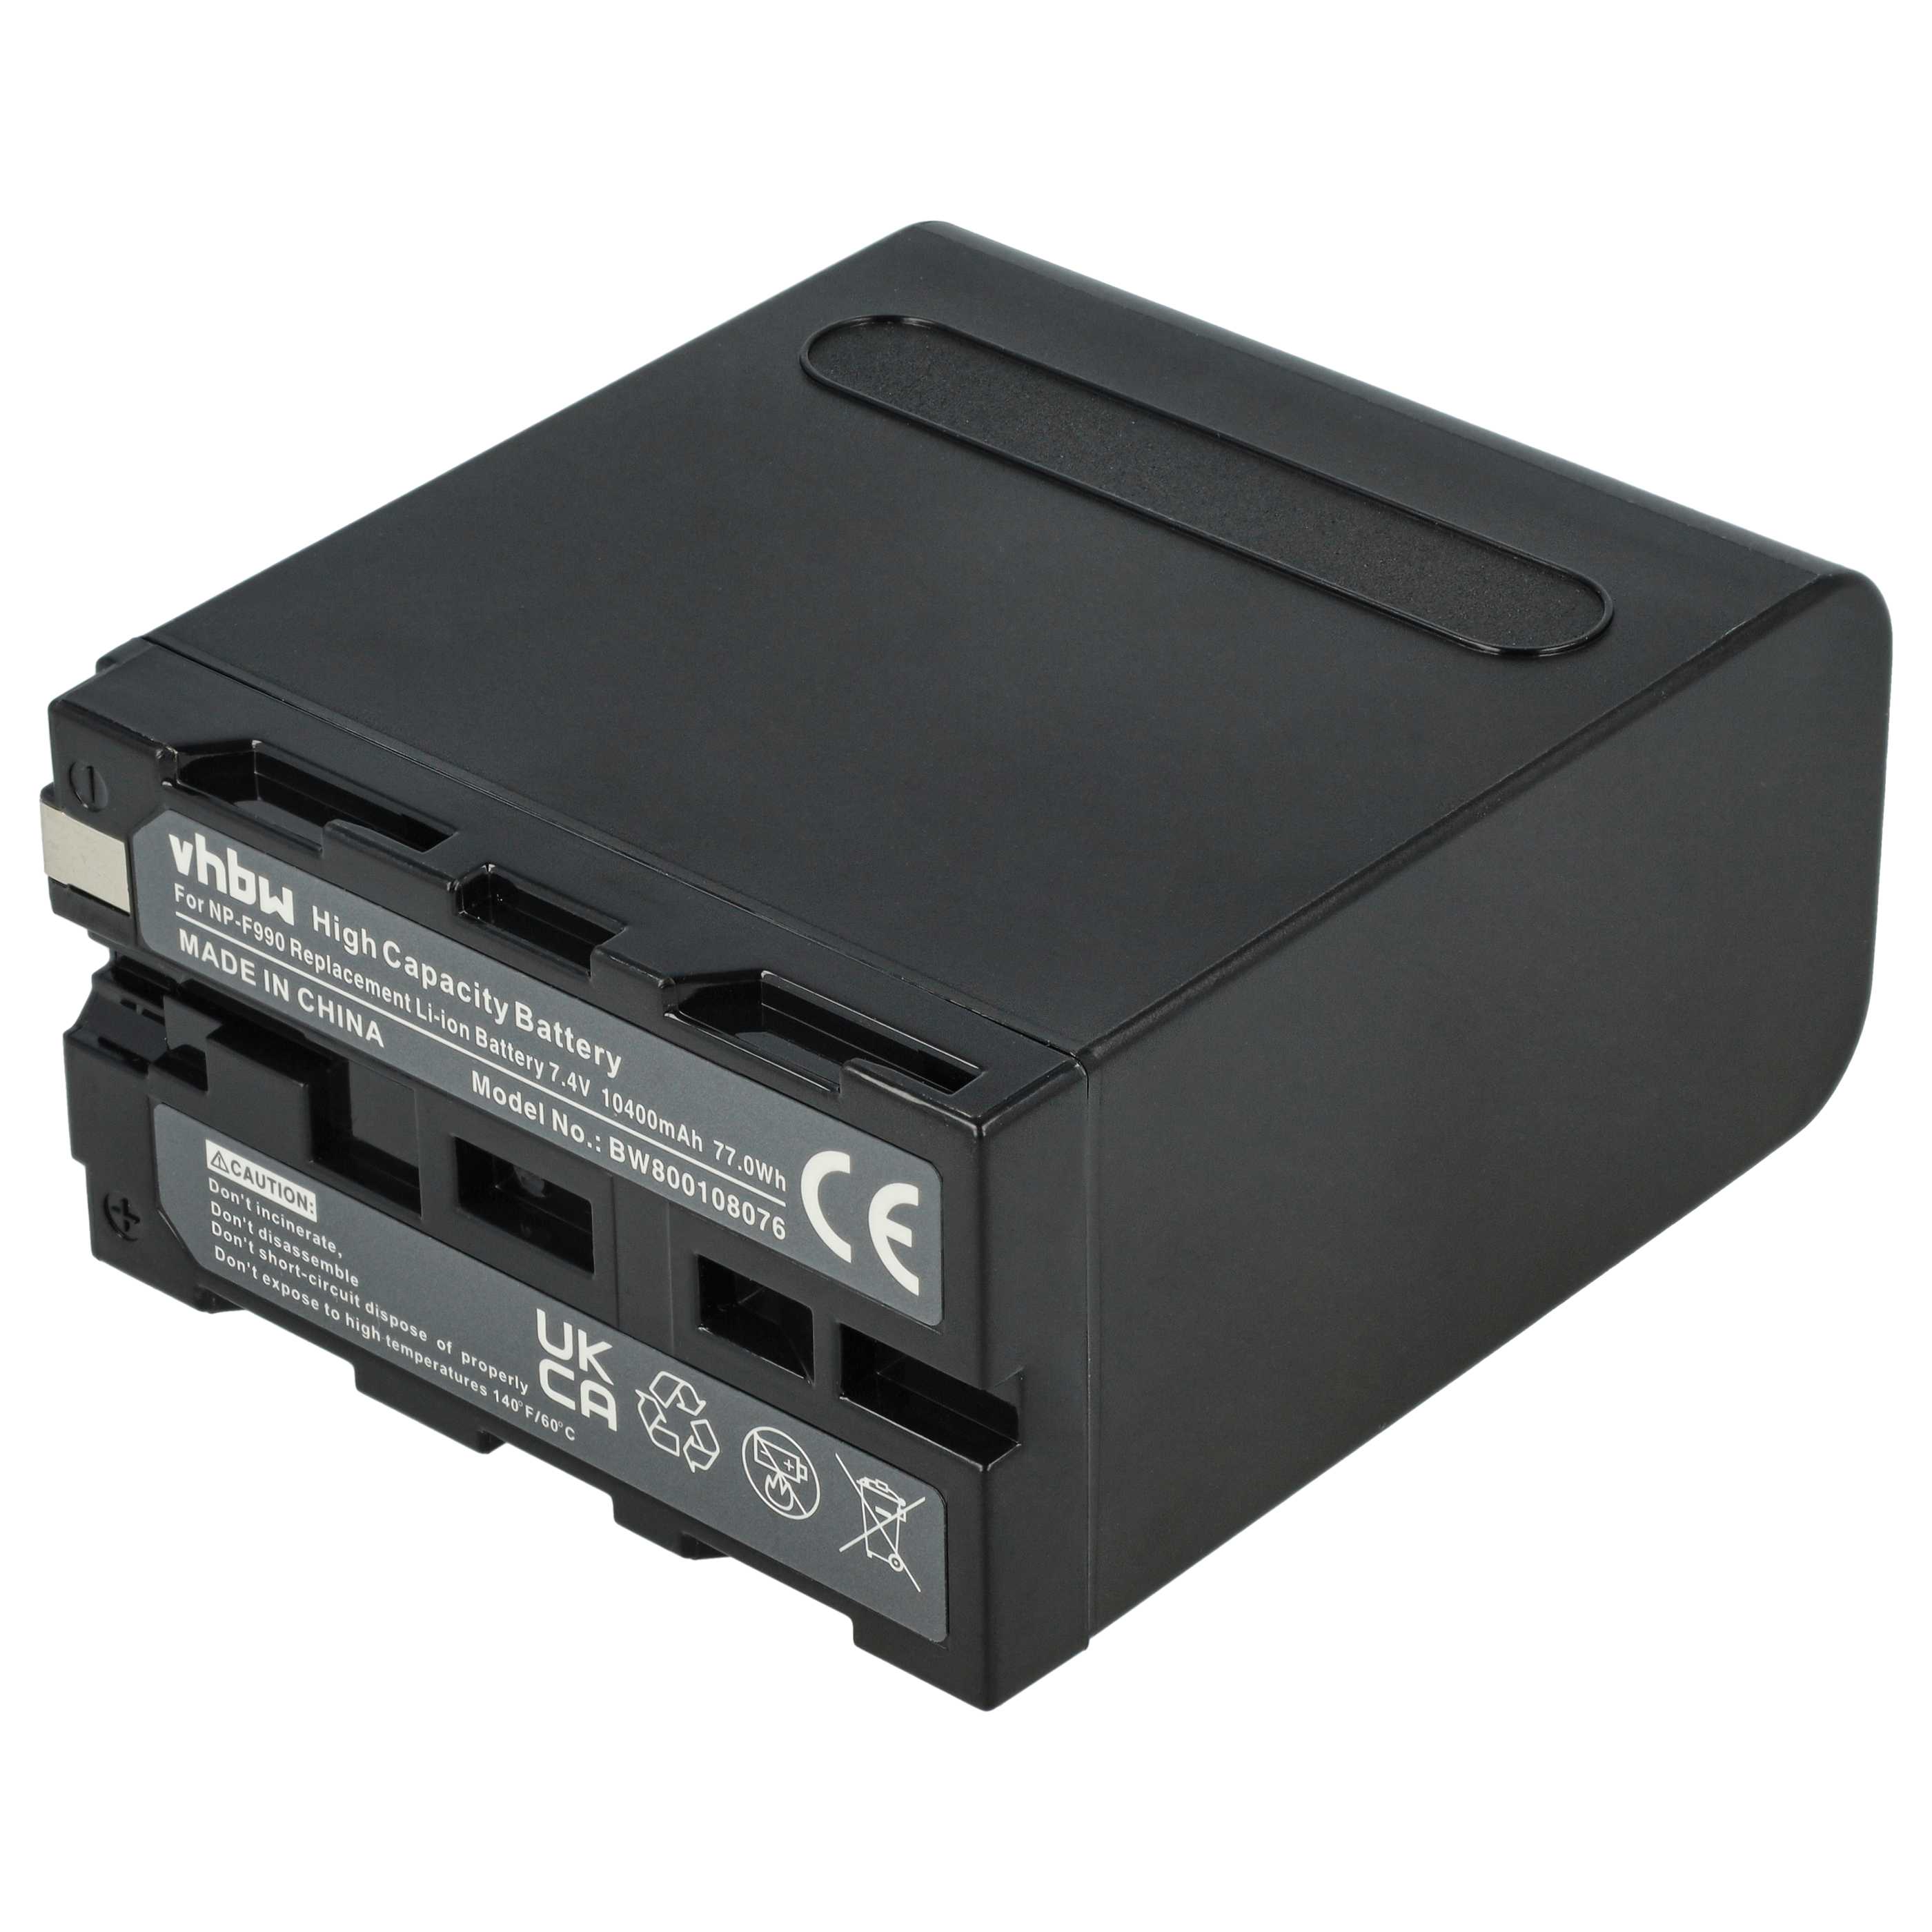 3x Akumulator do kamery cyfrowej / wideo zamiennik Sony NP-F930, NP-F960, NP-F950 - 10400 mAh 7,4 V Li-Ion